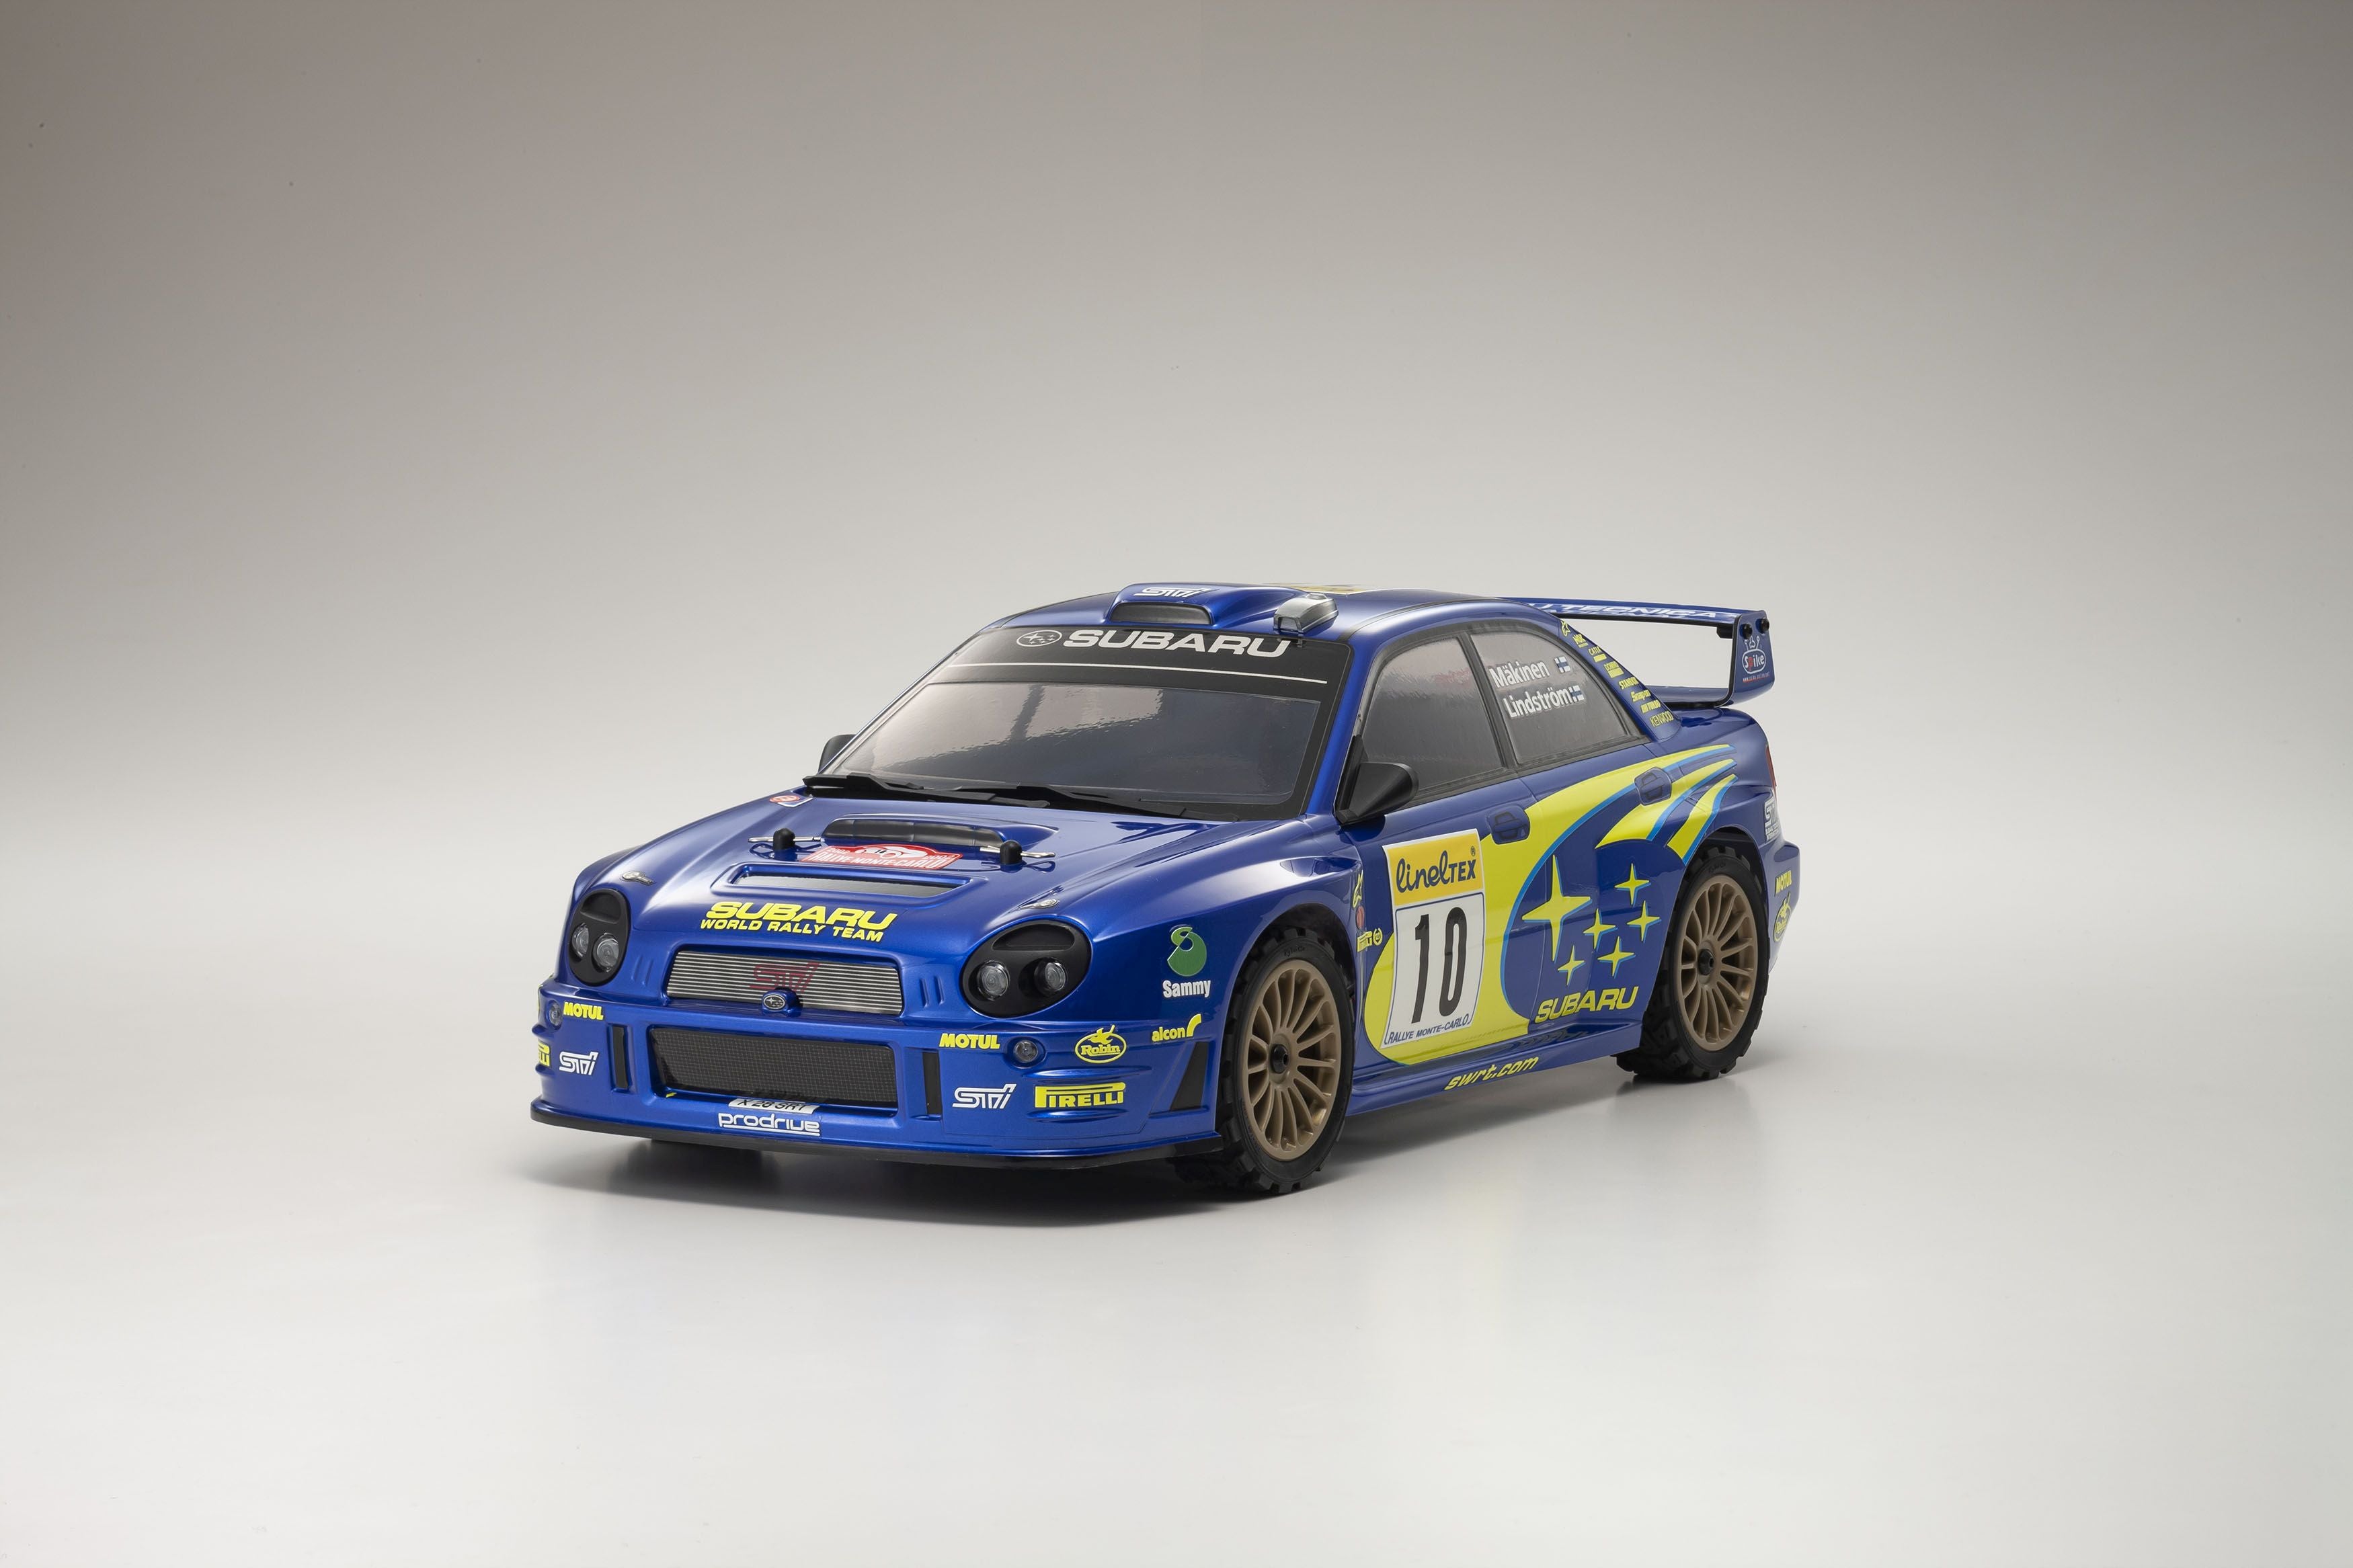 2002 Subaru Impreza WRC 34481T1 – Chris's House